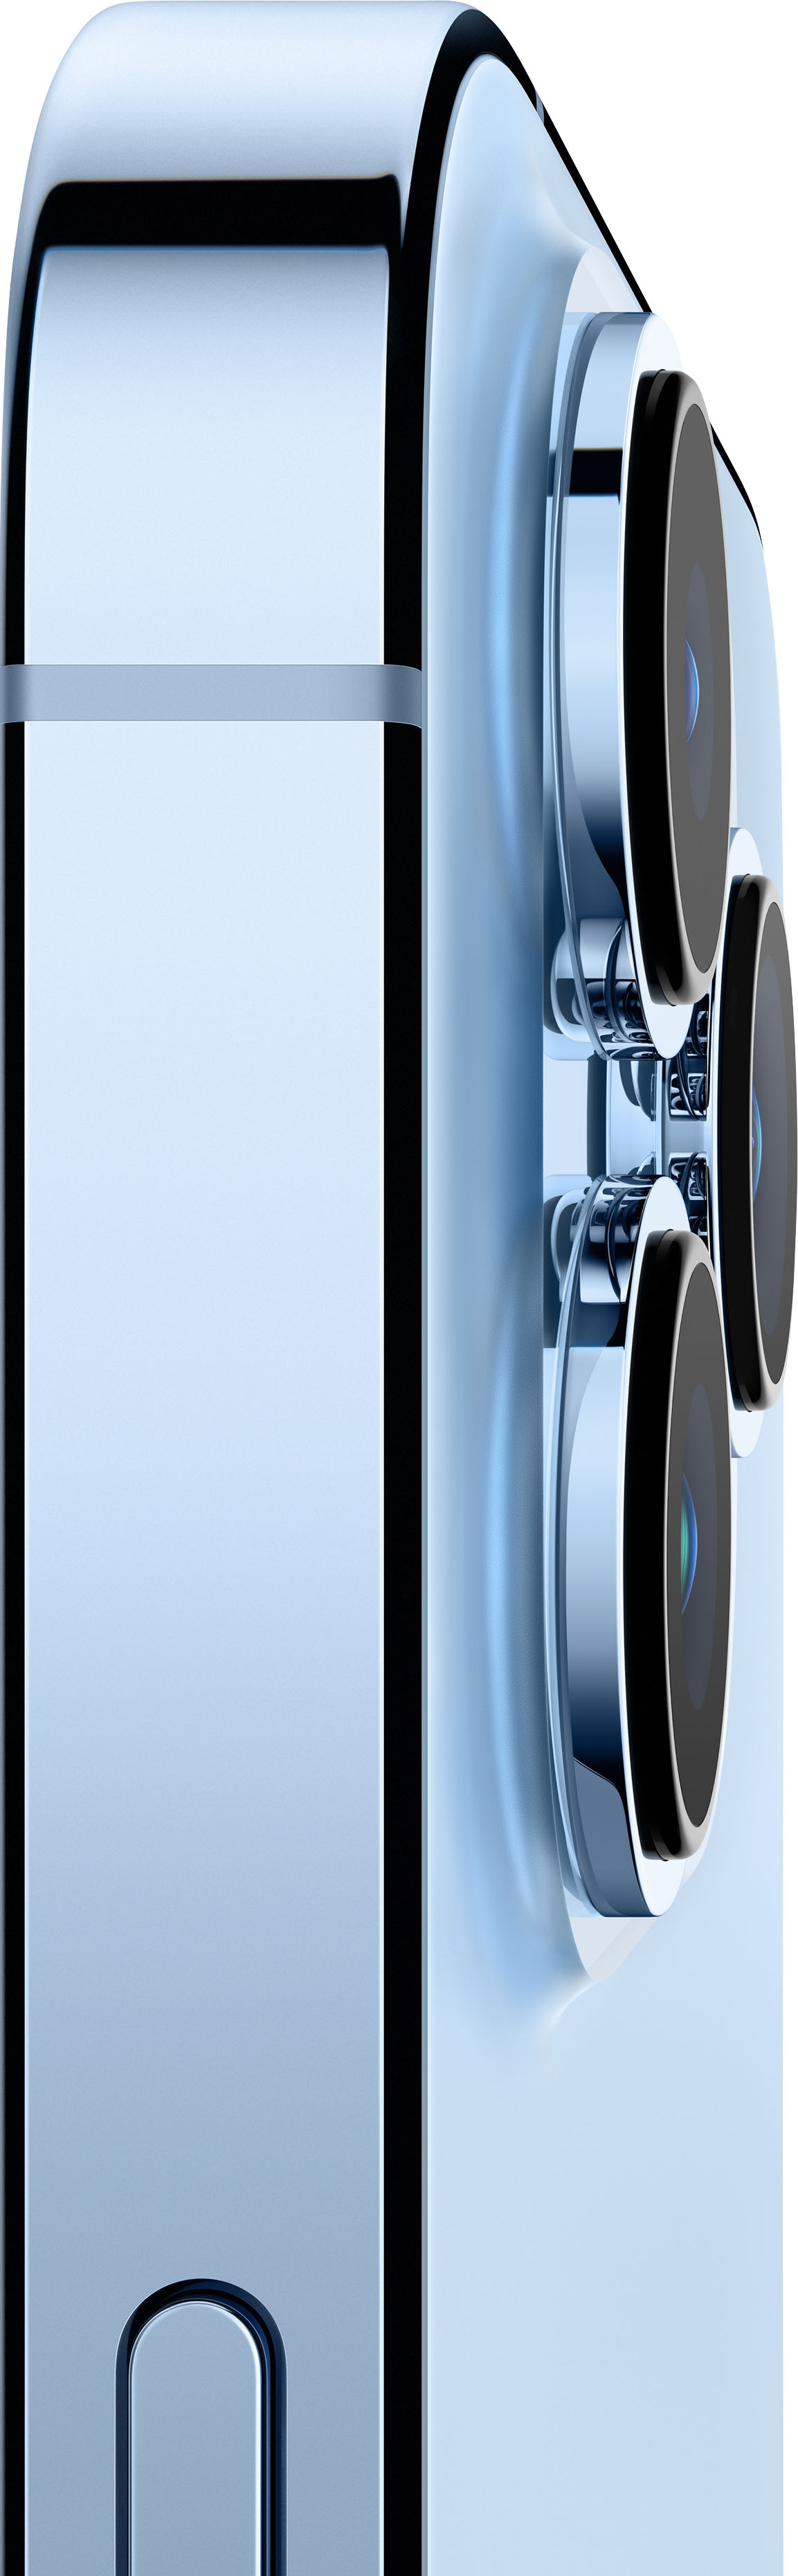 iPhone 13 Pro 256GB Azul Apple